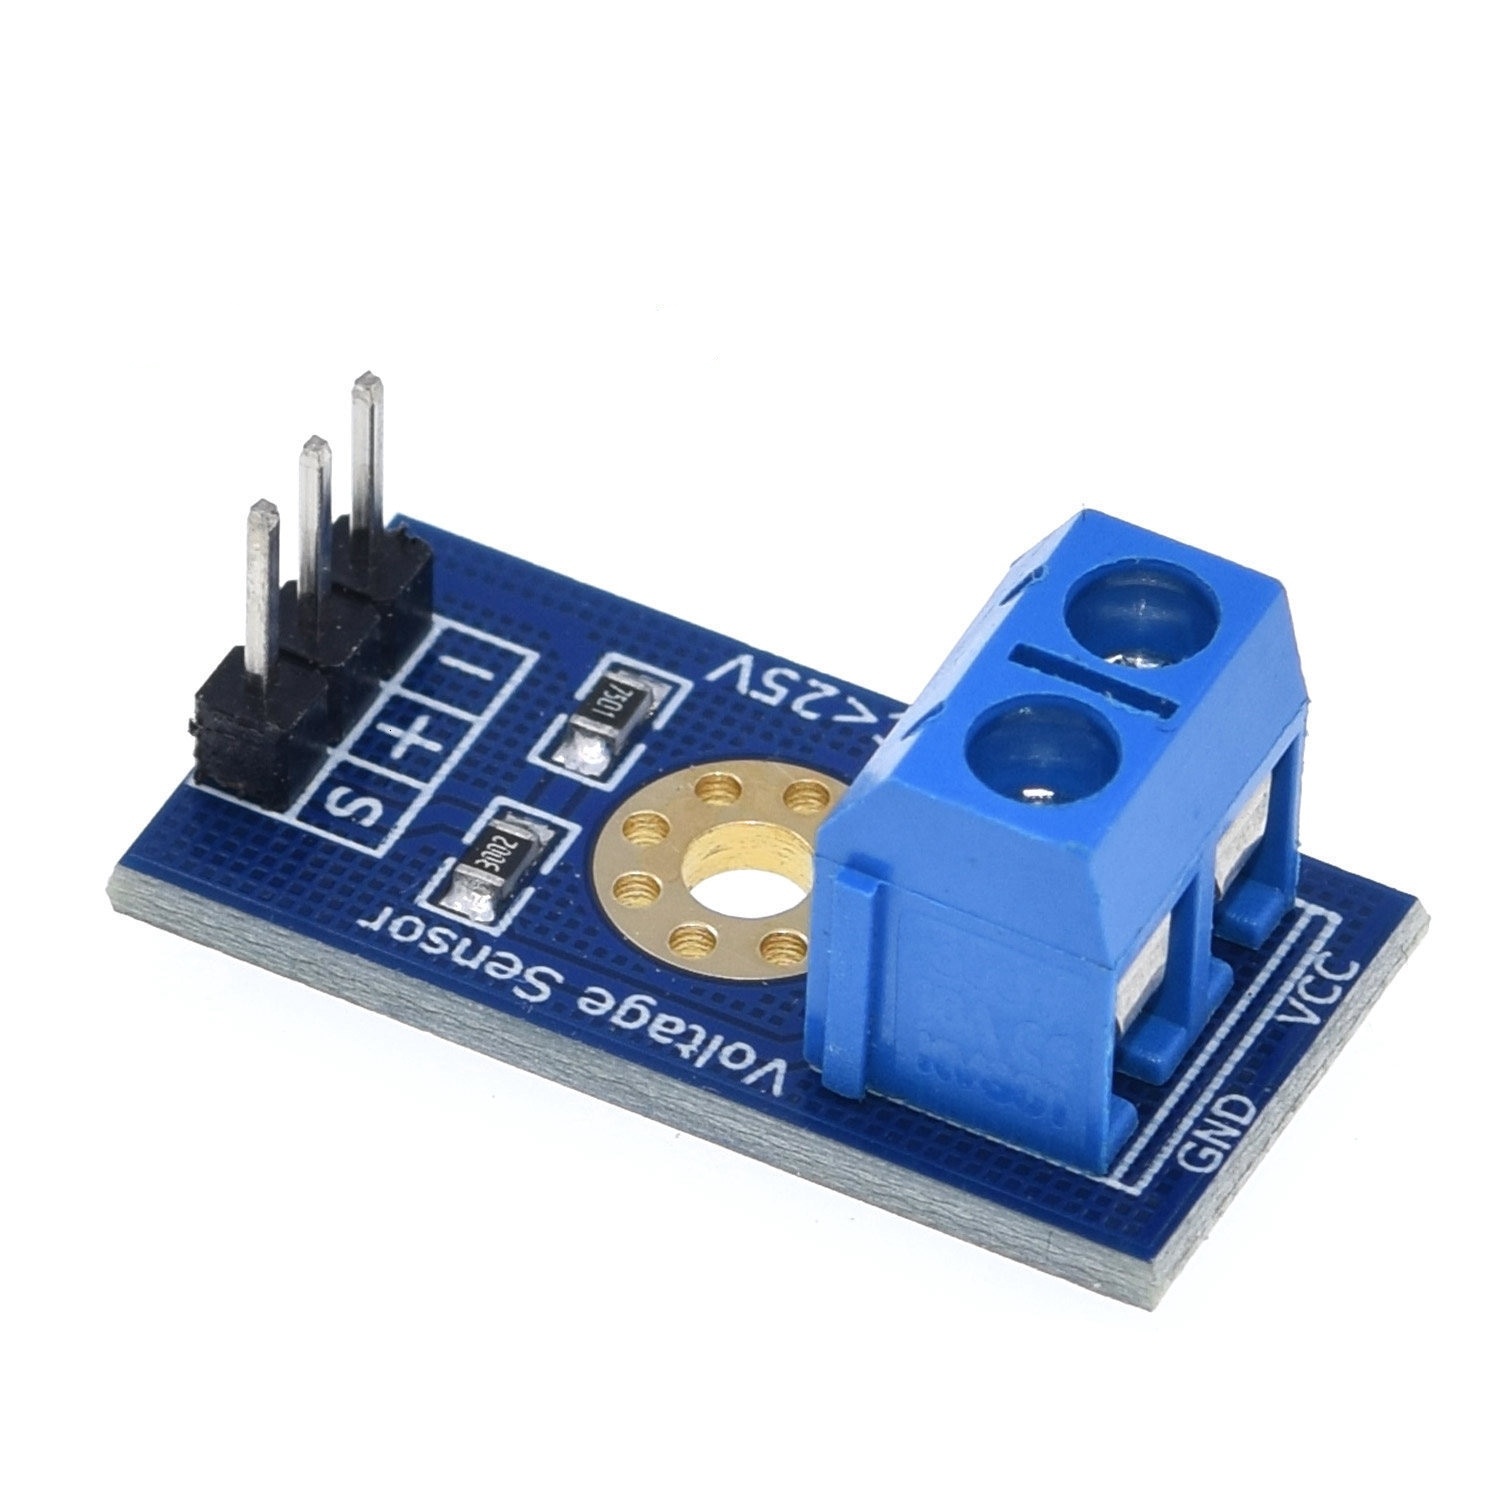 Standard Voltage Sensor Module Test Electronic Bricks For Robot For Arduino